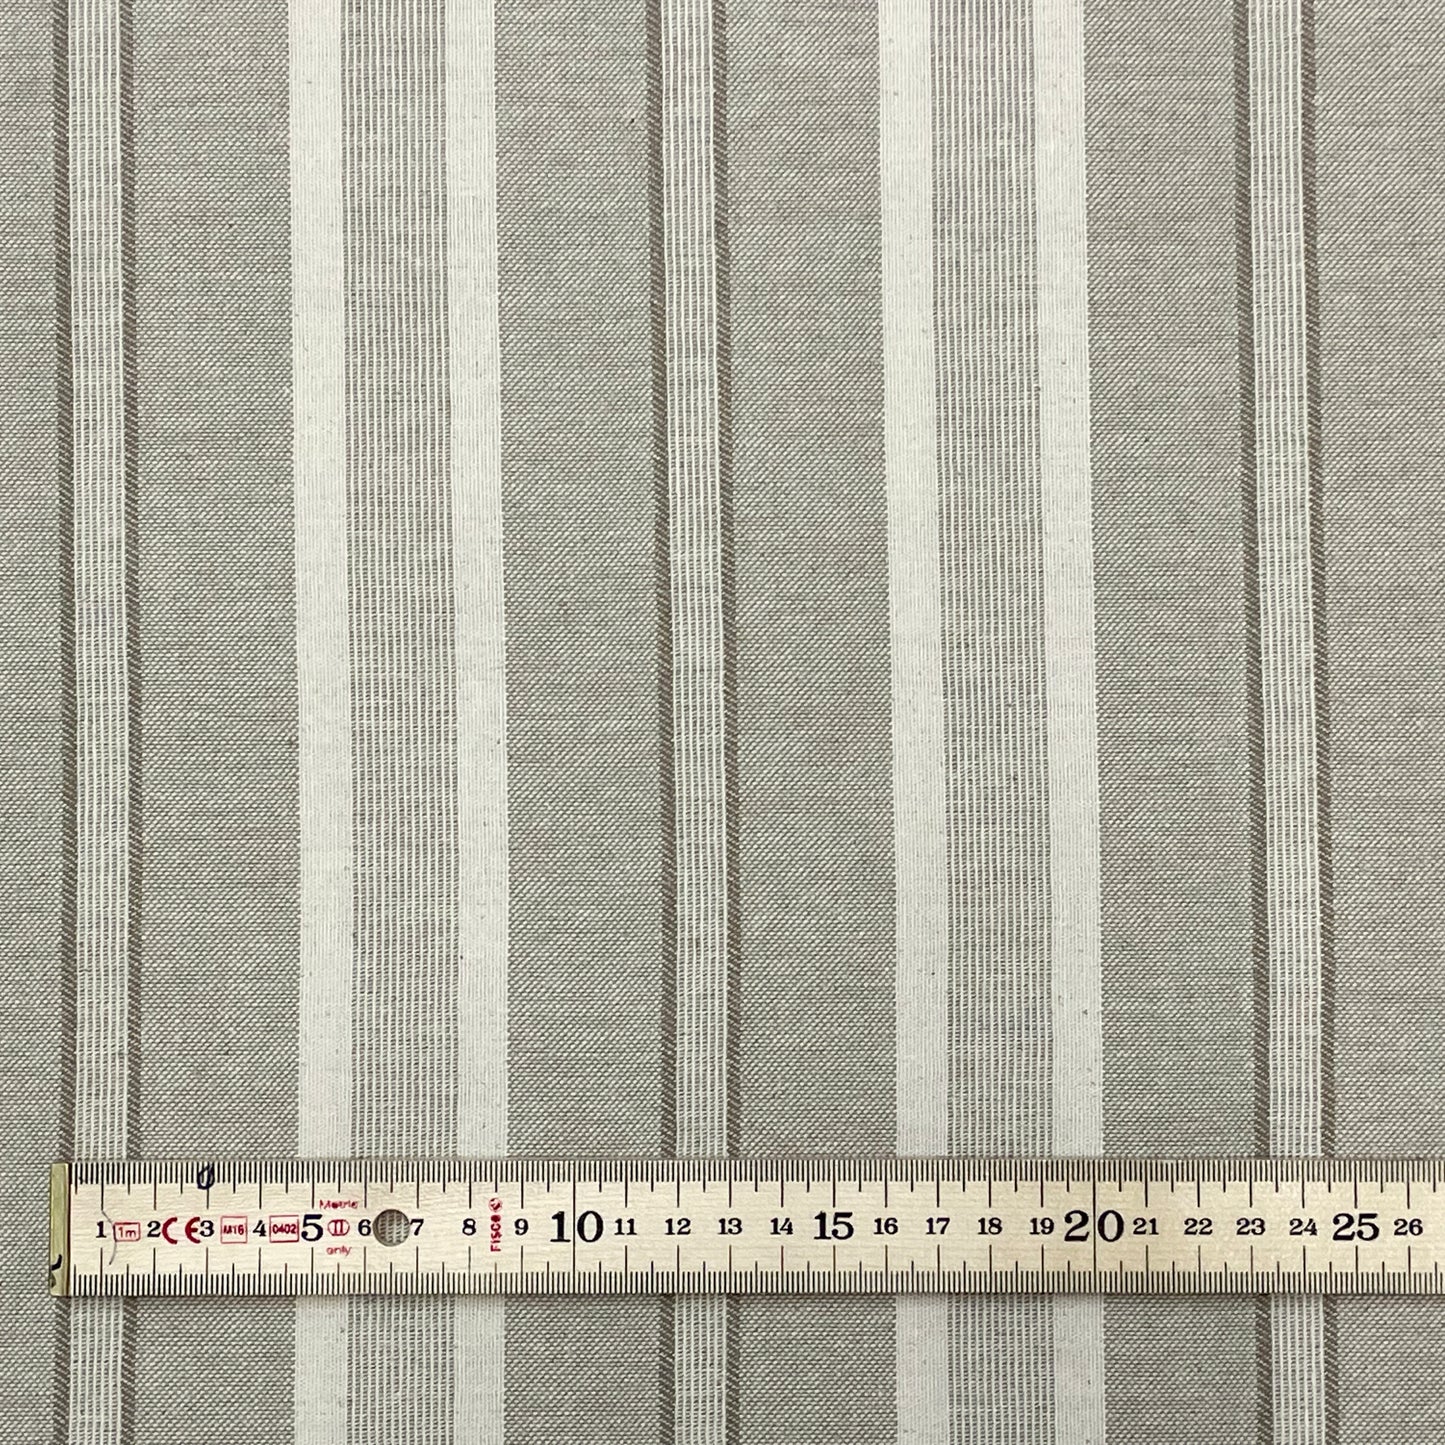 Princeton Stripe Cream Double Width Room Fabric